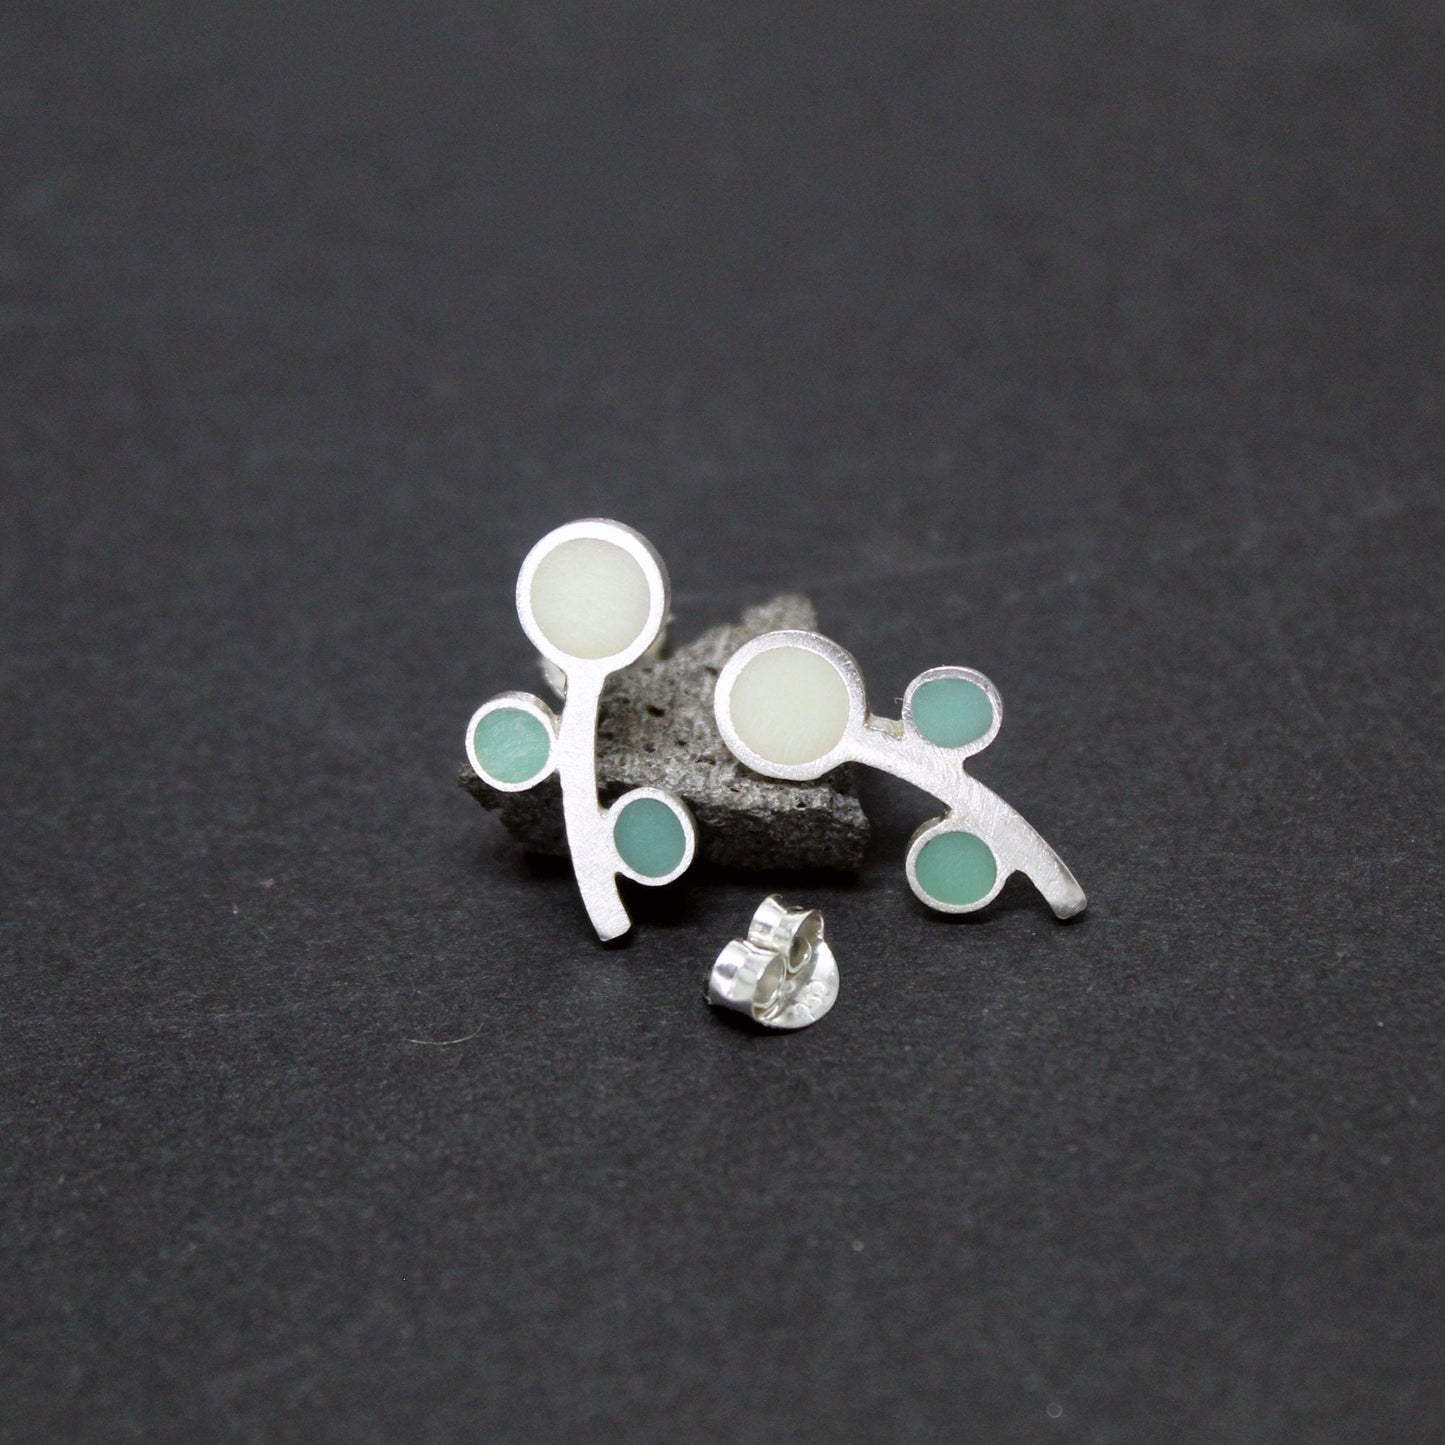 Colored flowers earrings in 925 silver